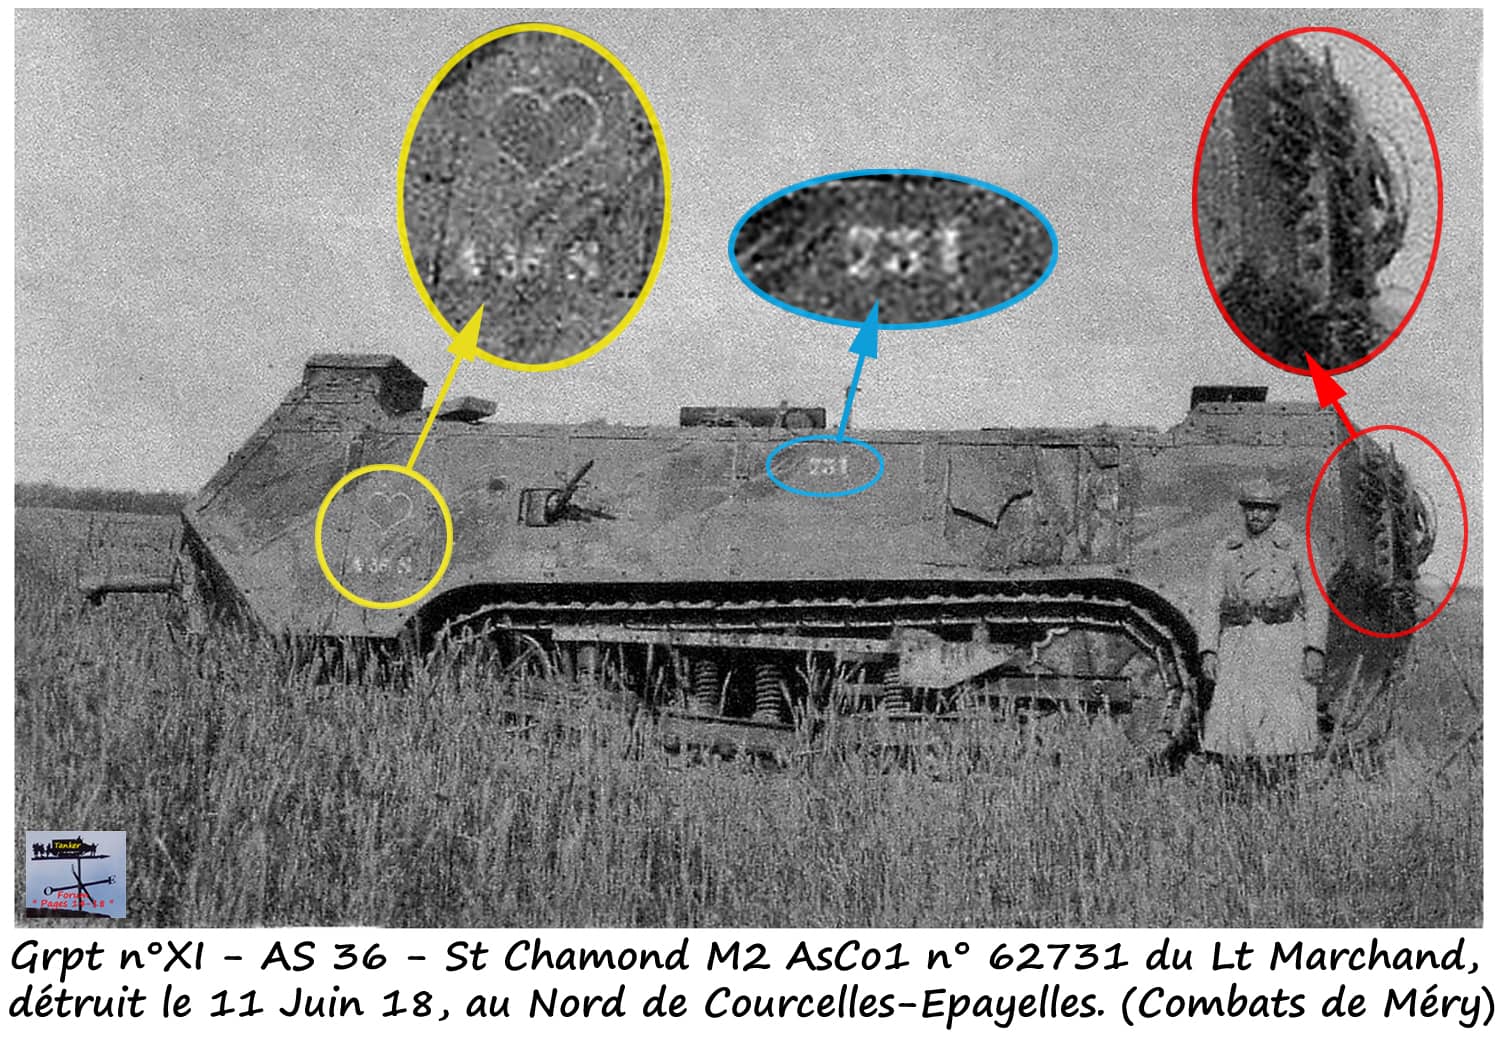 Grpt X - AS 36 - St Chamond M2 AsCo1 n° 62731 (01)-min.jpg